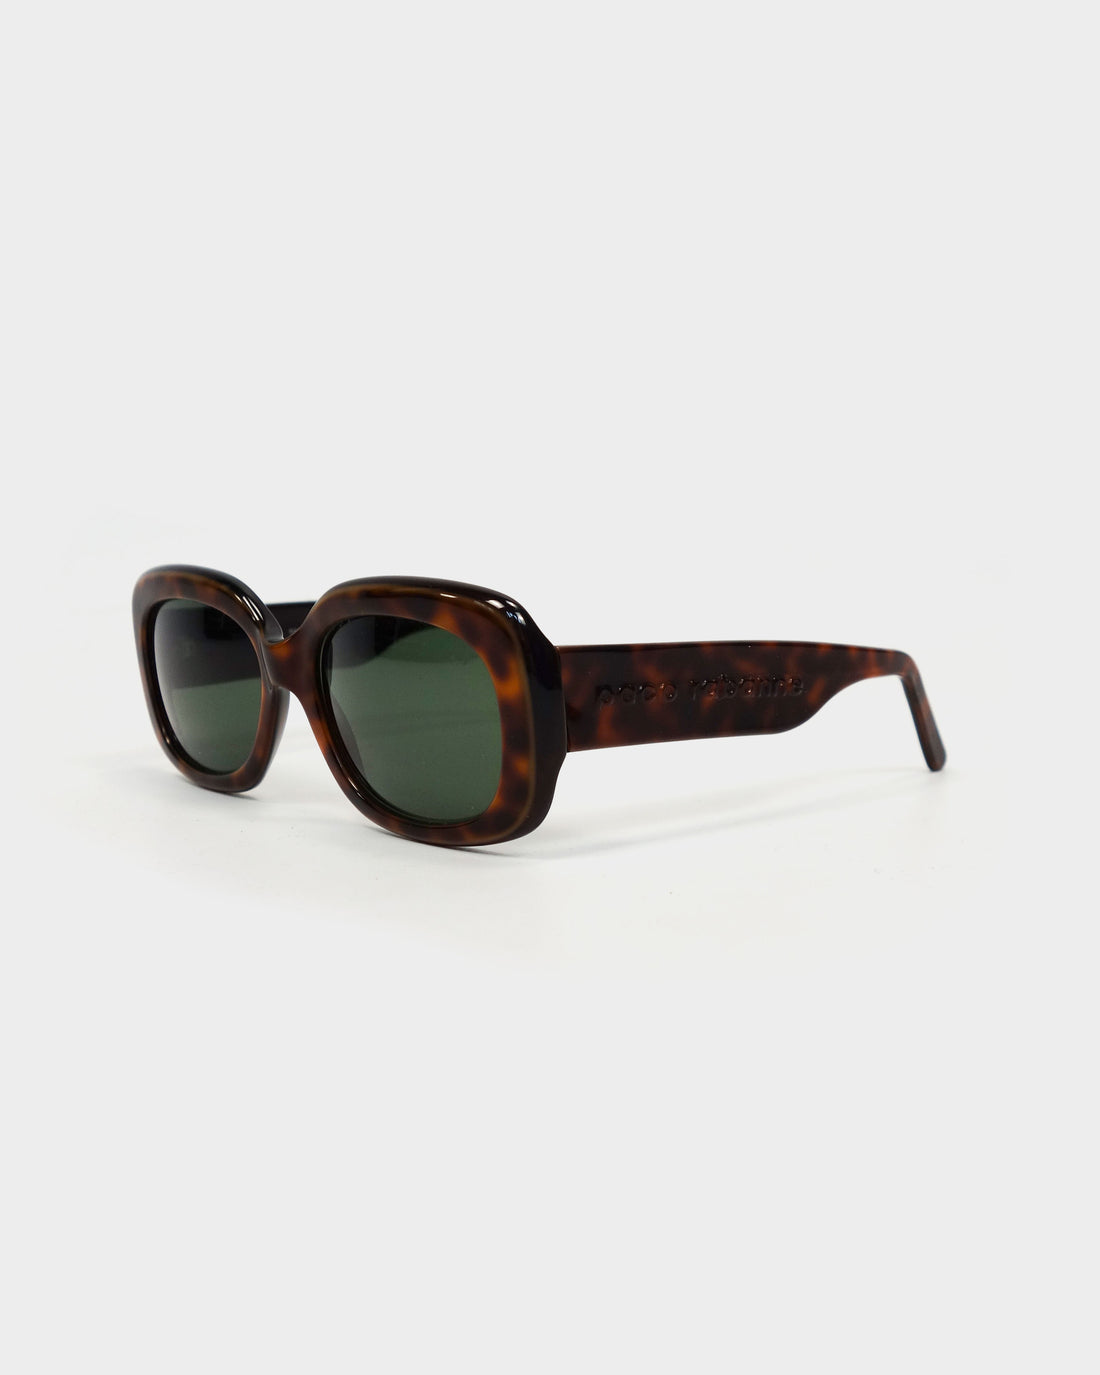 Paco Rabanne Brown Dun Sunglasses 2000's